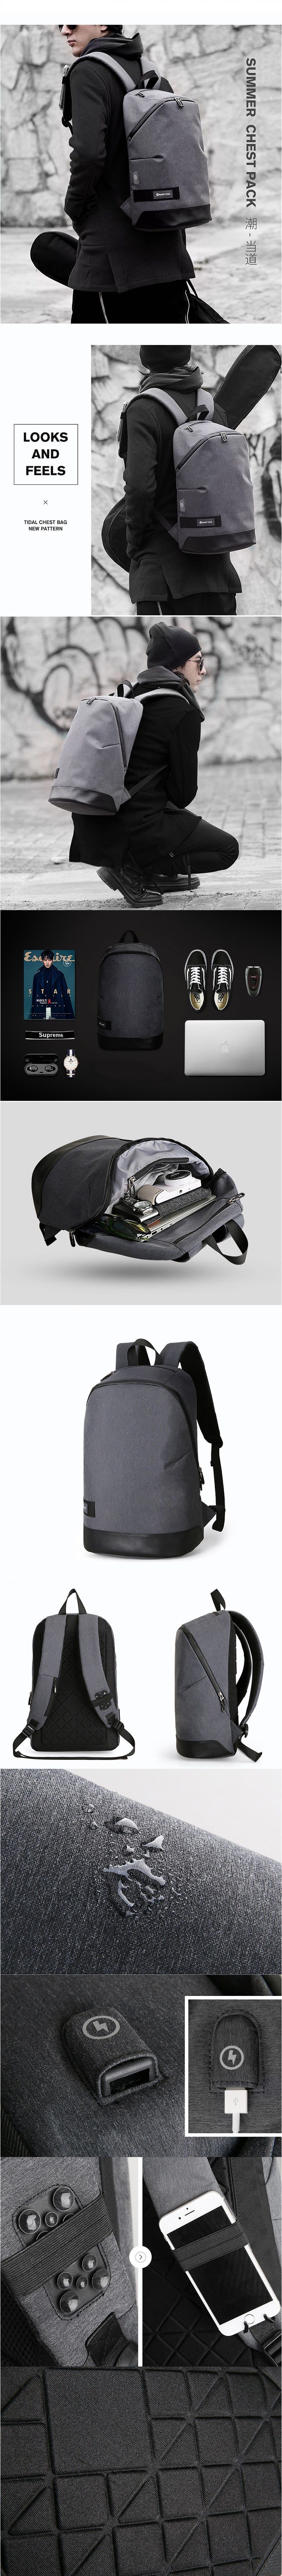 Mazzy-Star-MS_210-156-Inch-Laptop-Backpack-USB-Charging-Anti-thief-Laptop-Bag-Mens-Shoulder-Bag-Busi-1529200